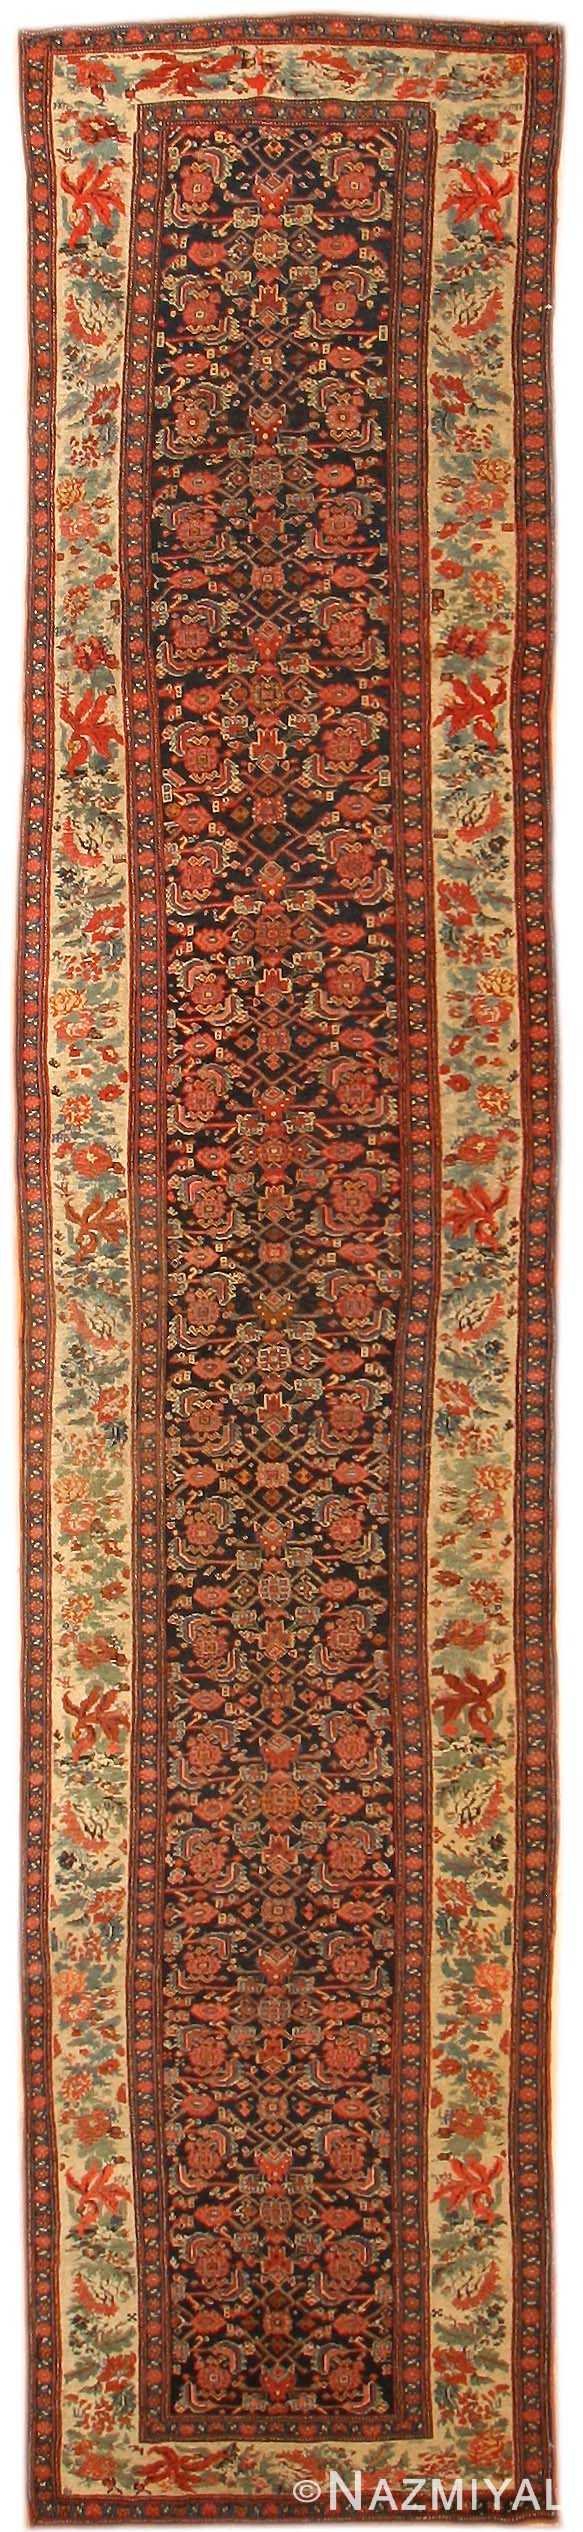 Antique Bidjar Persian Rug 43881 Nazmiyal